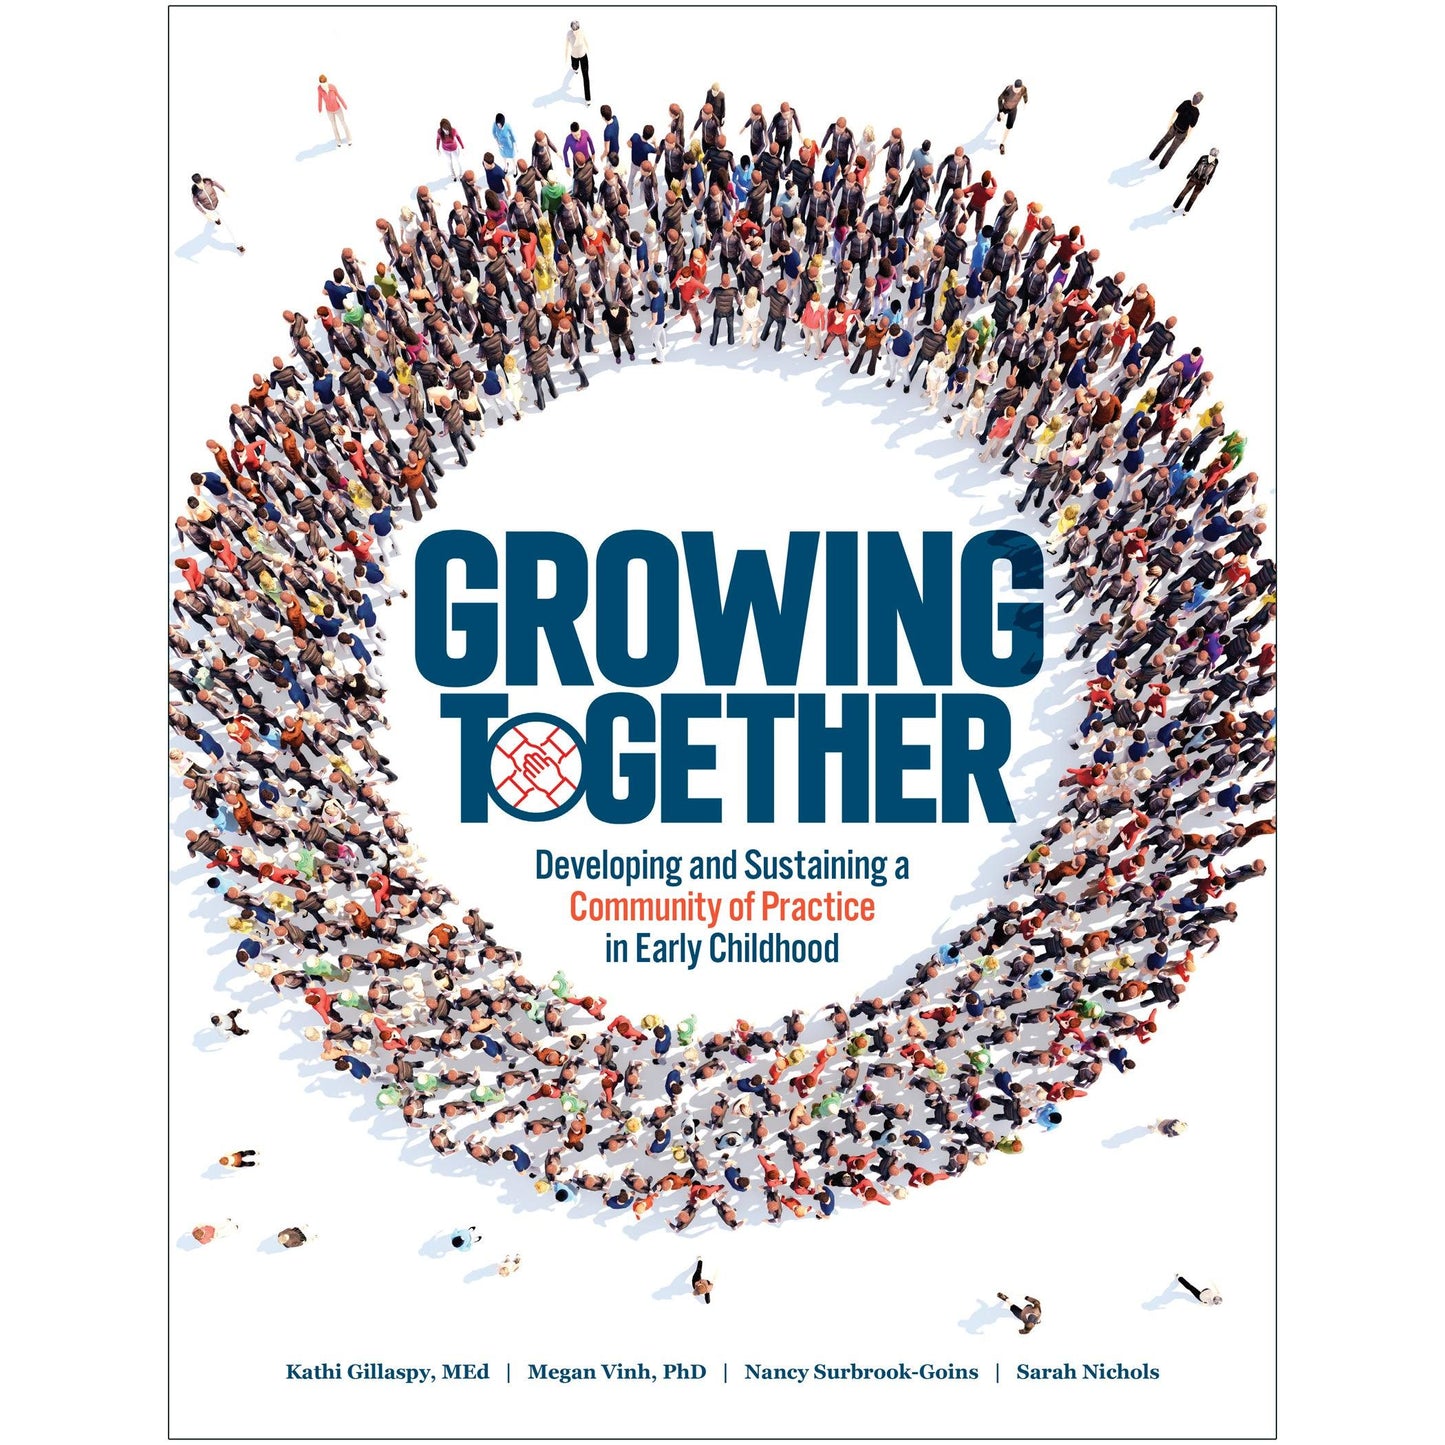 Growing Together - Loomini